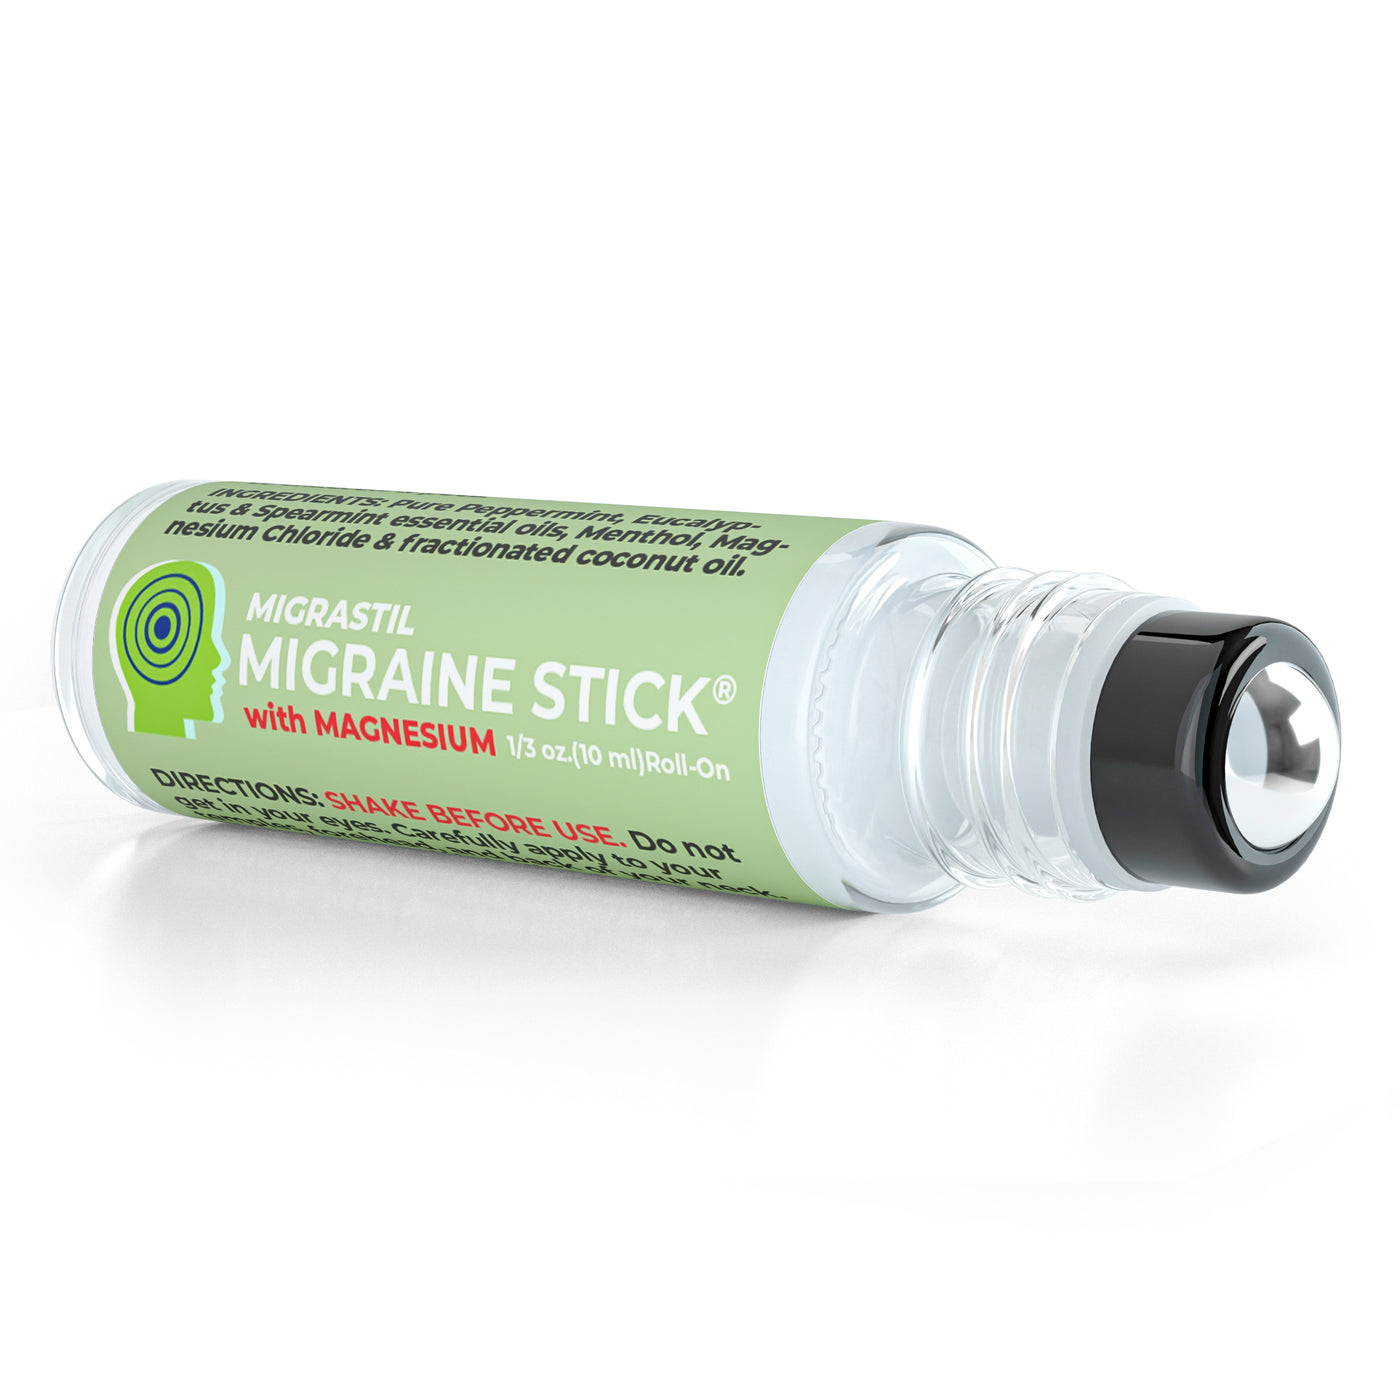 NEW! Migrastil Migraine Stick with Magnesium